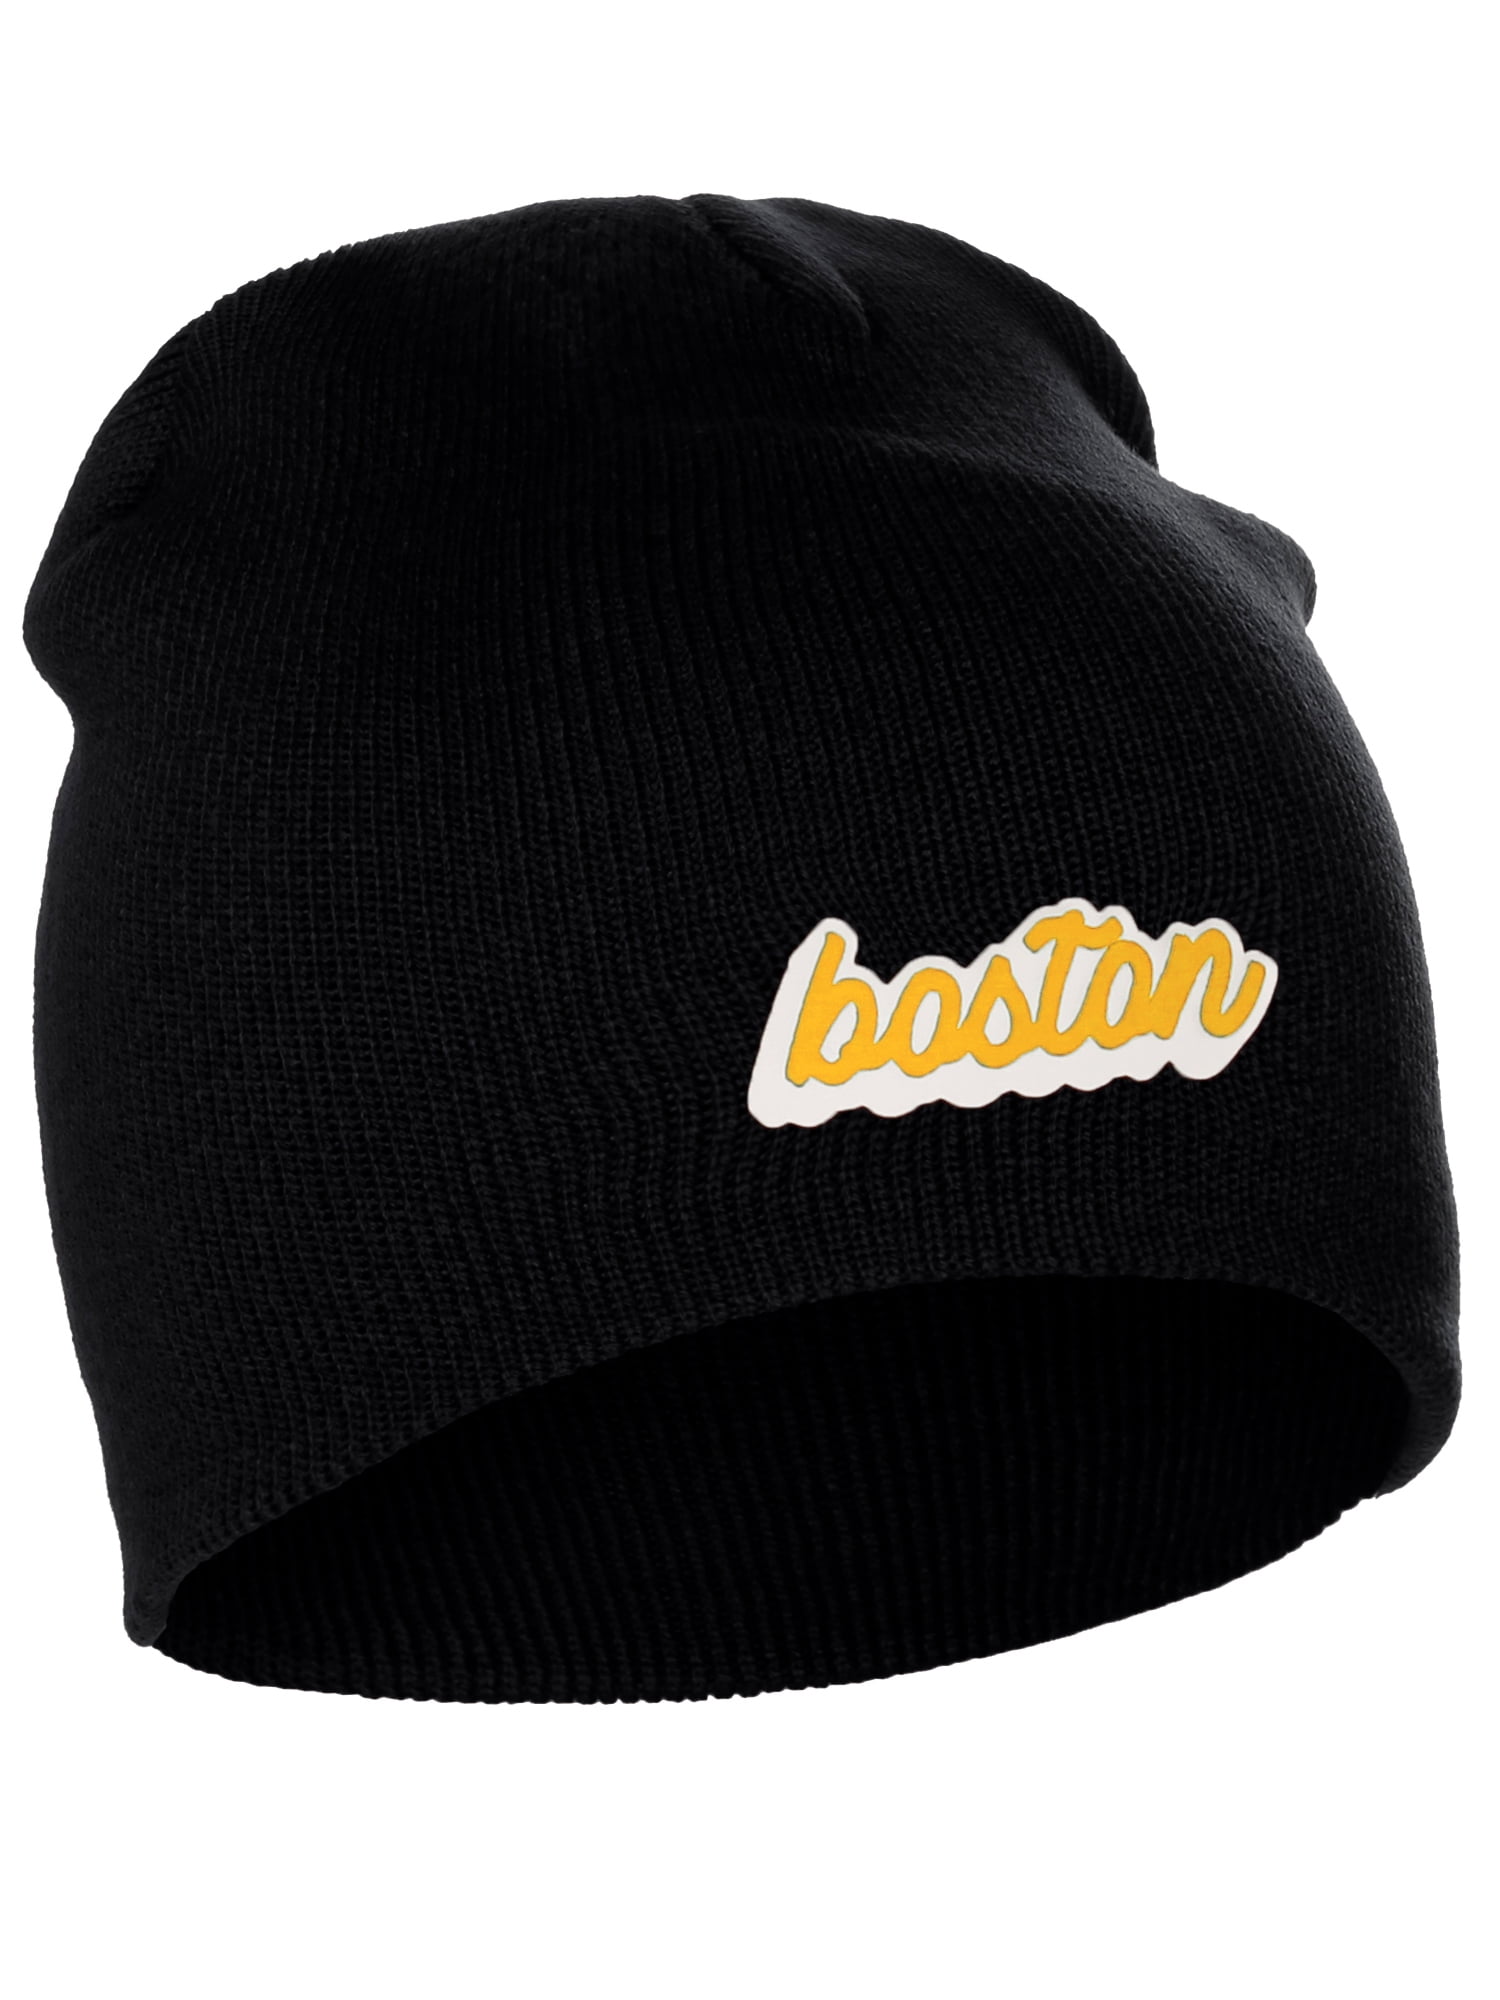 Boston Bruins Black Cuffless Knit Beanie Hat Cap 